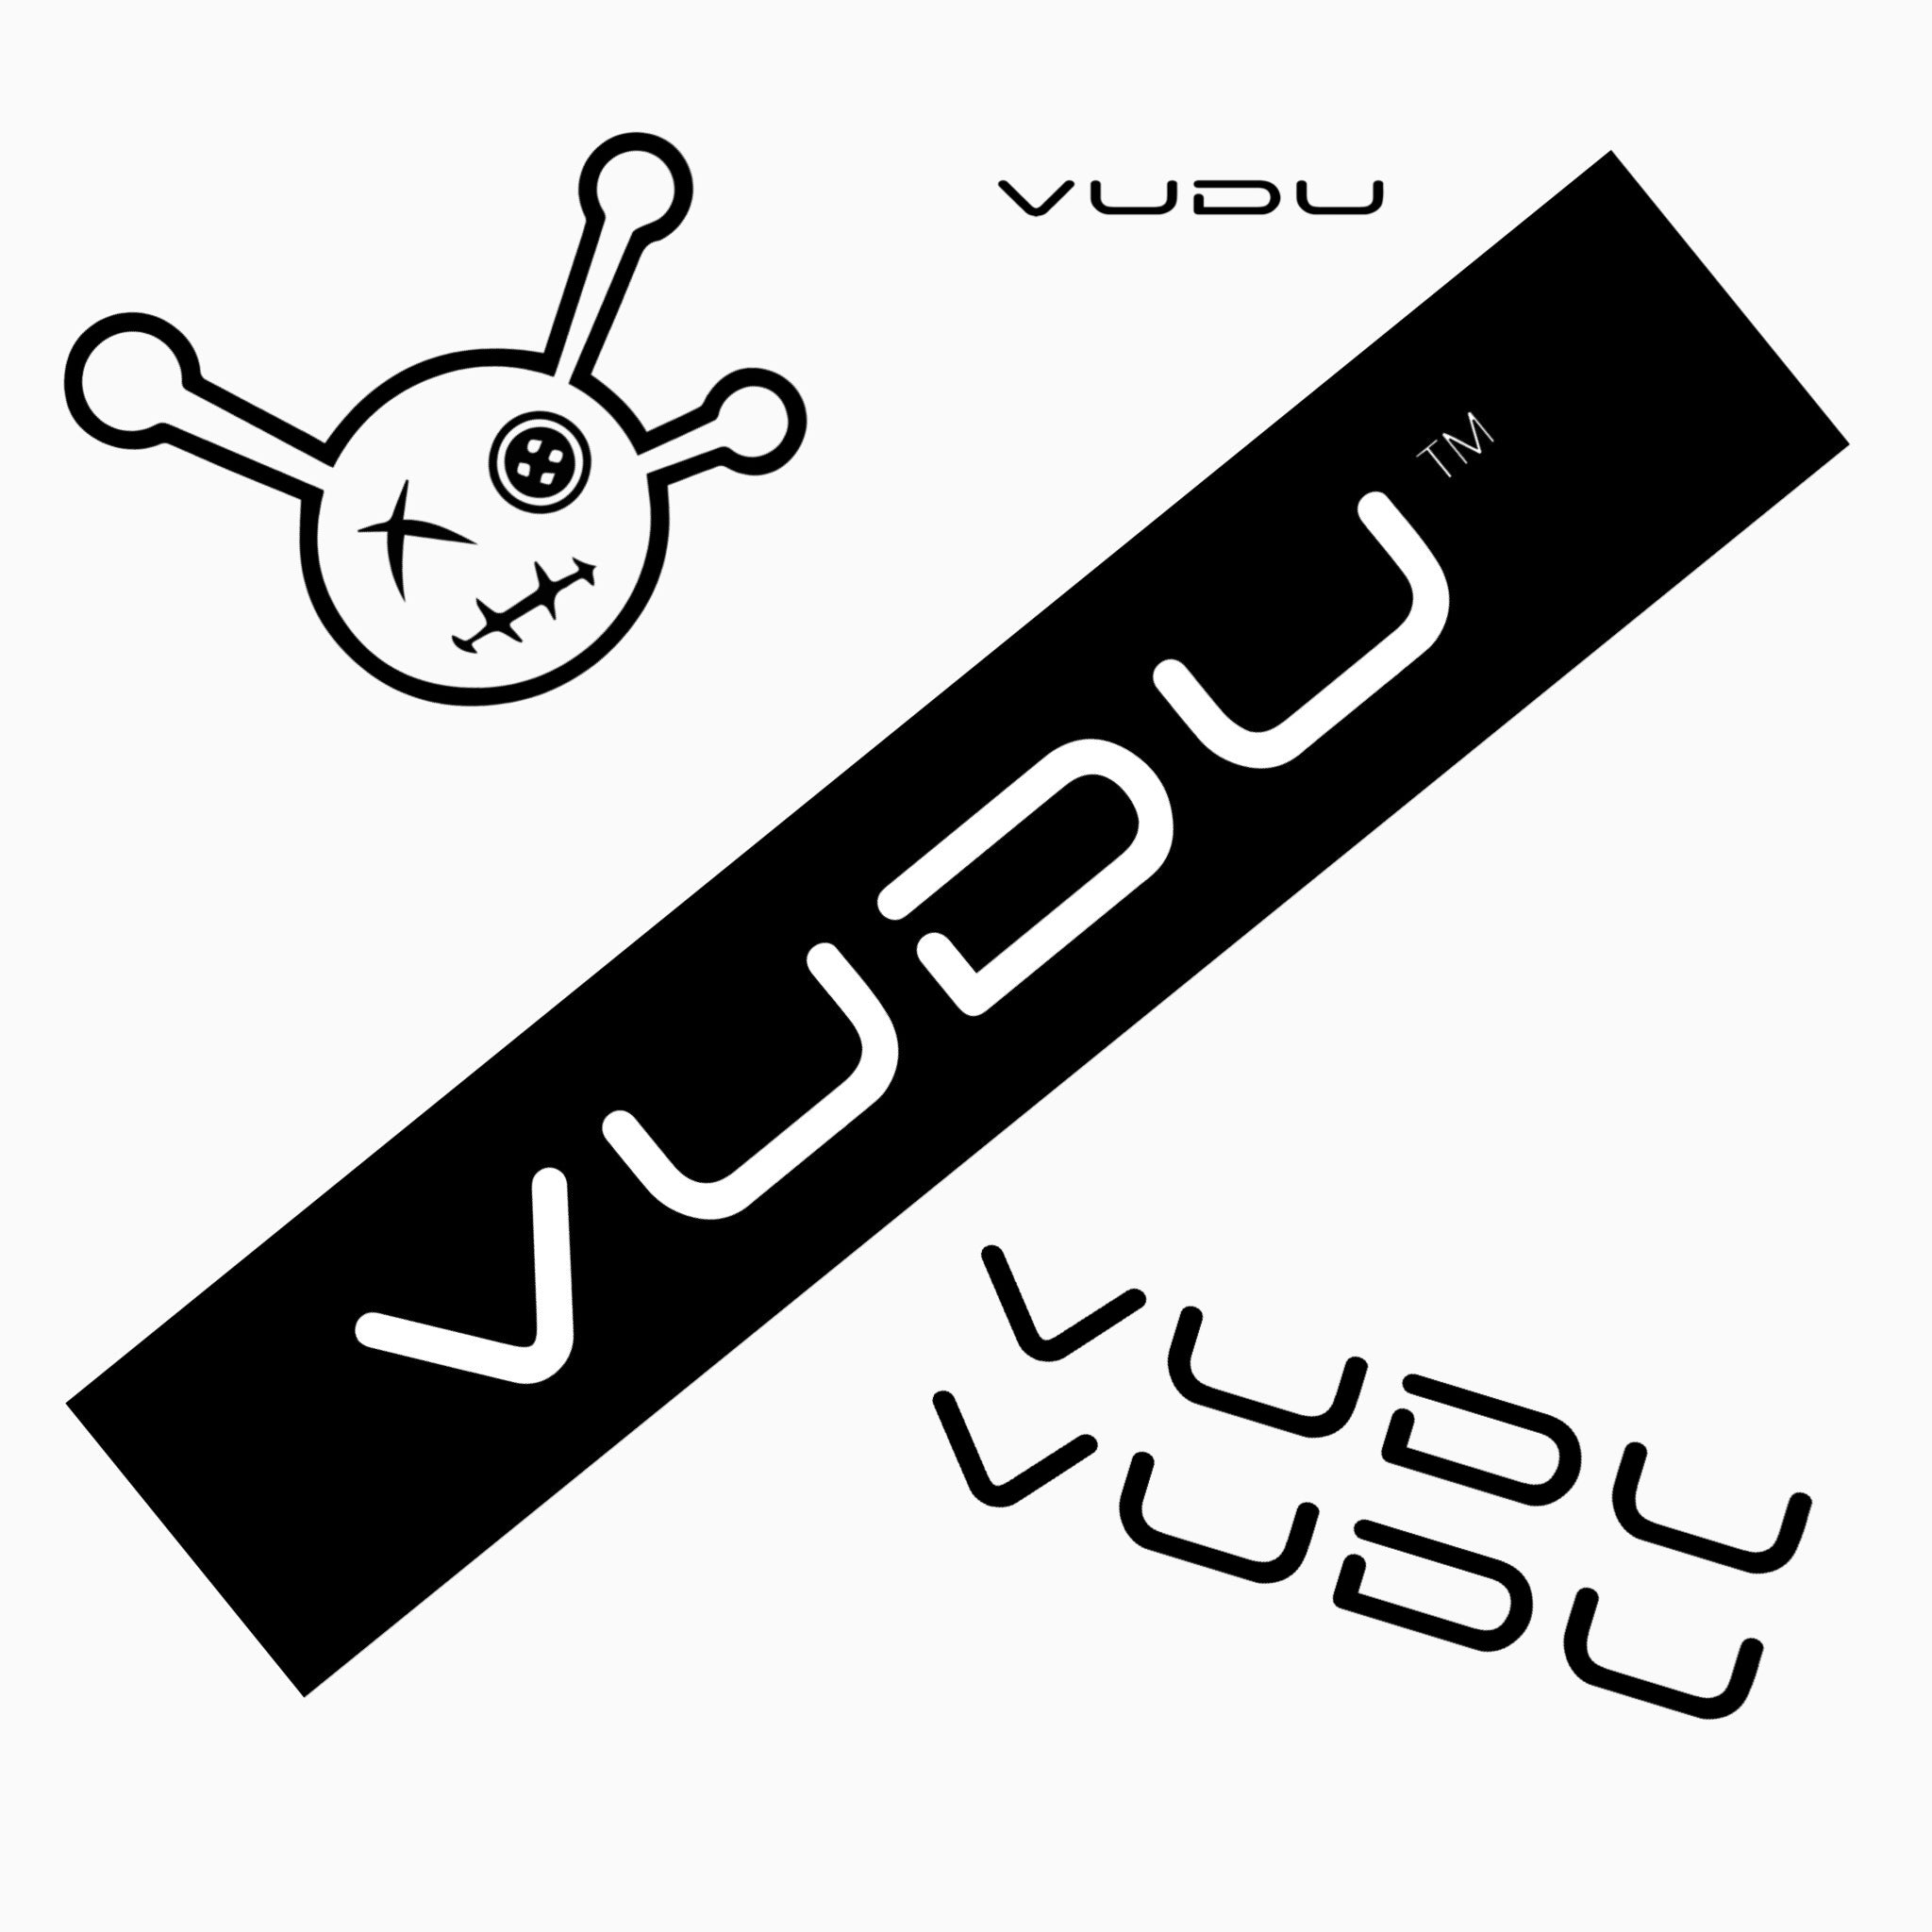 VUDU Ultimate Dress Up Car Sticker Kit